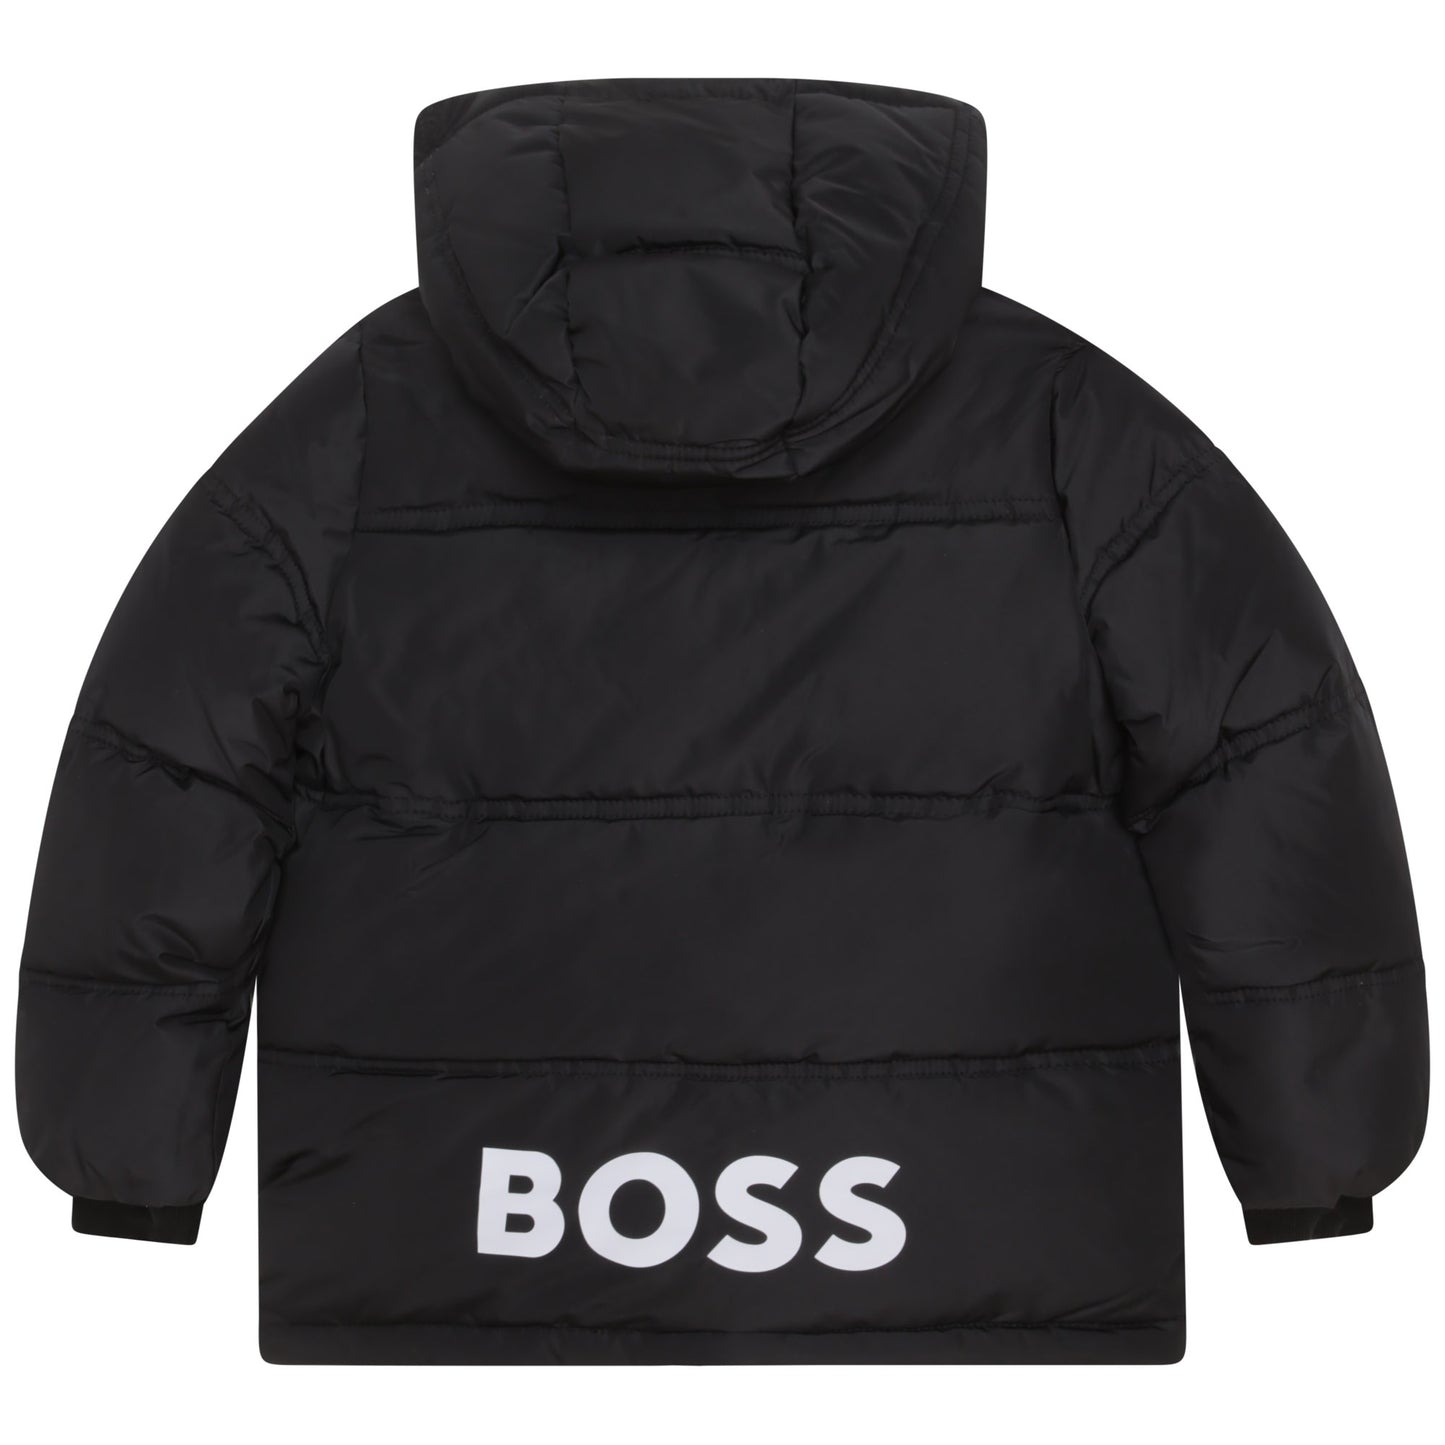 Hugo Boss Boys Puffer Jacket _Black J26488-09B